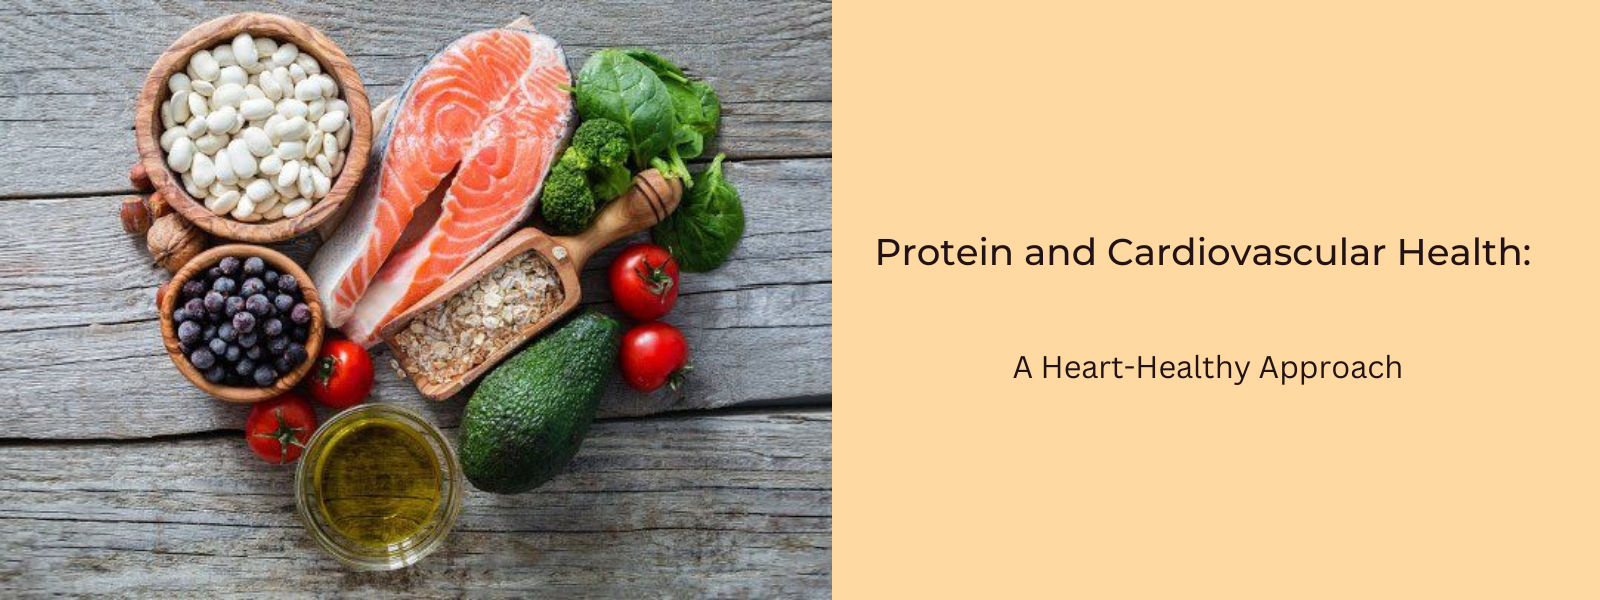 Protein and Cardiovascular Health: A Heart-Healthy Approach